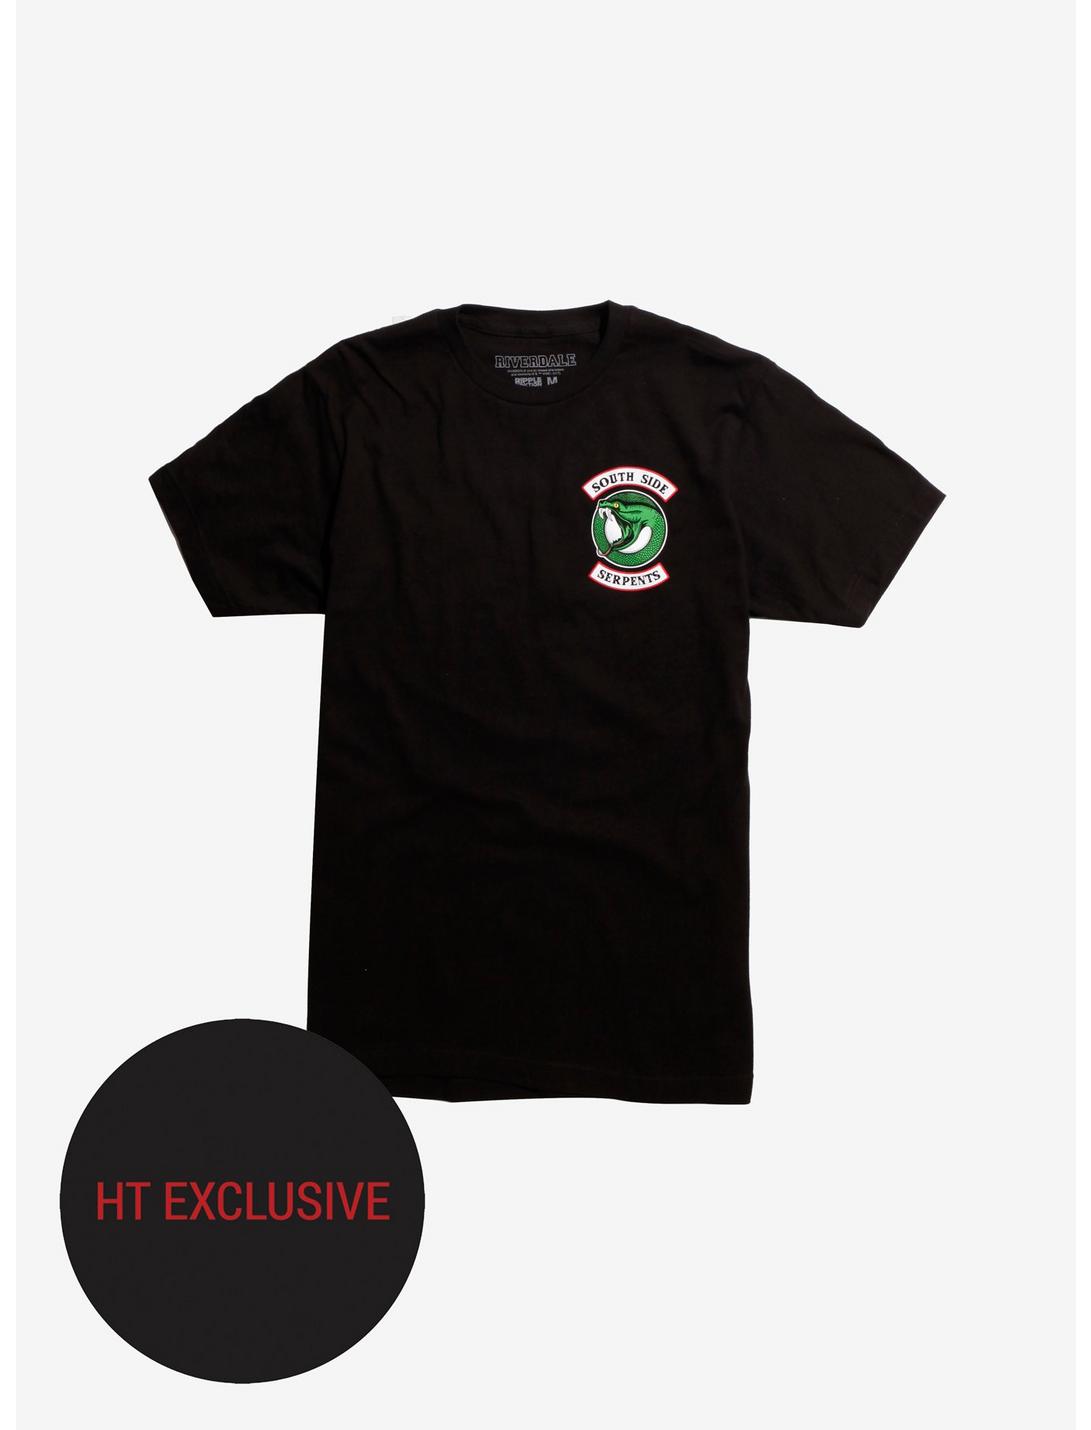 Riverdale Southside Serpents Circle Logo T-Shirt Hot Topic Exclusive, BLACK, hi-res